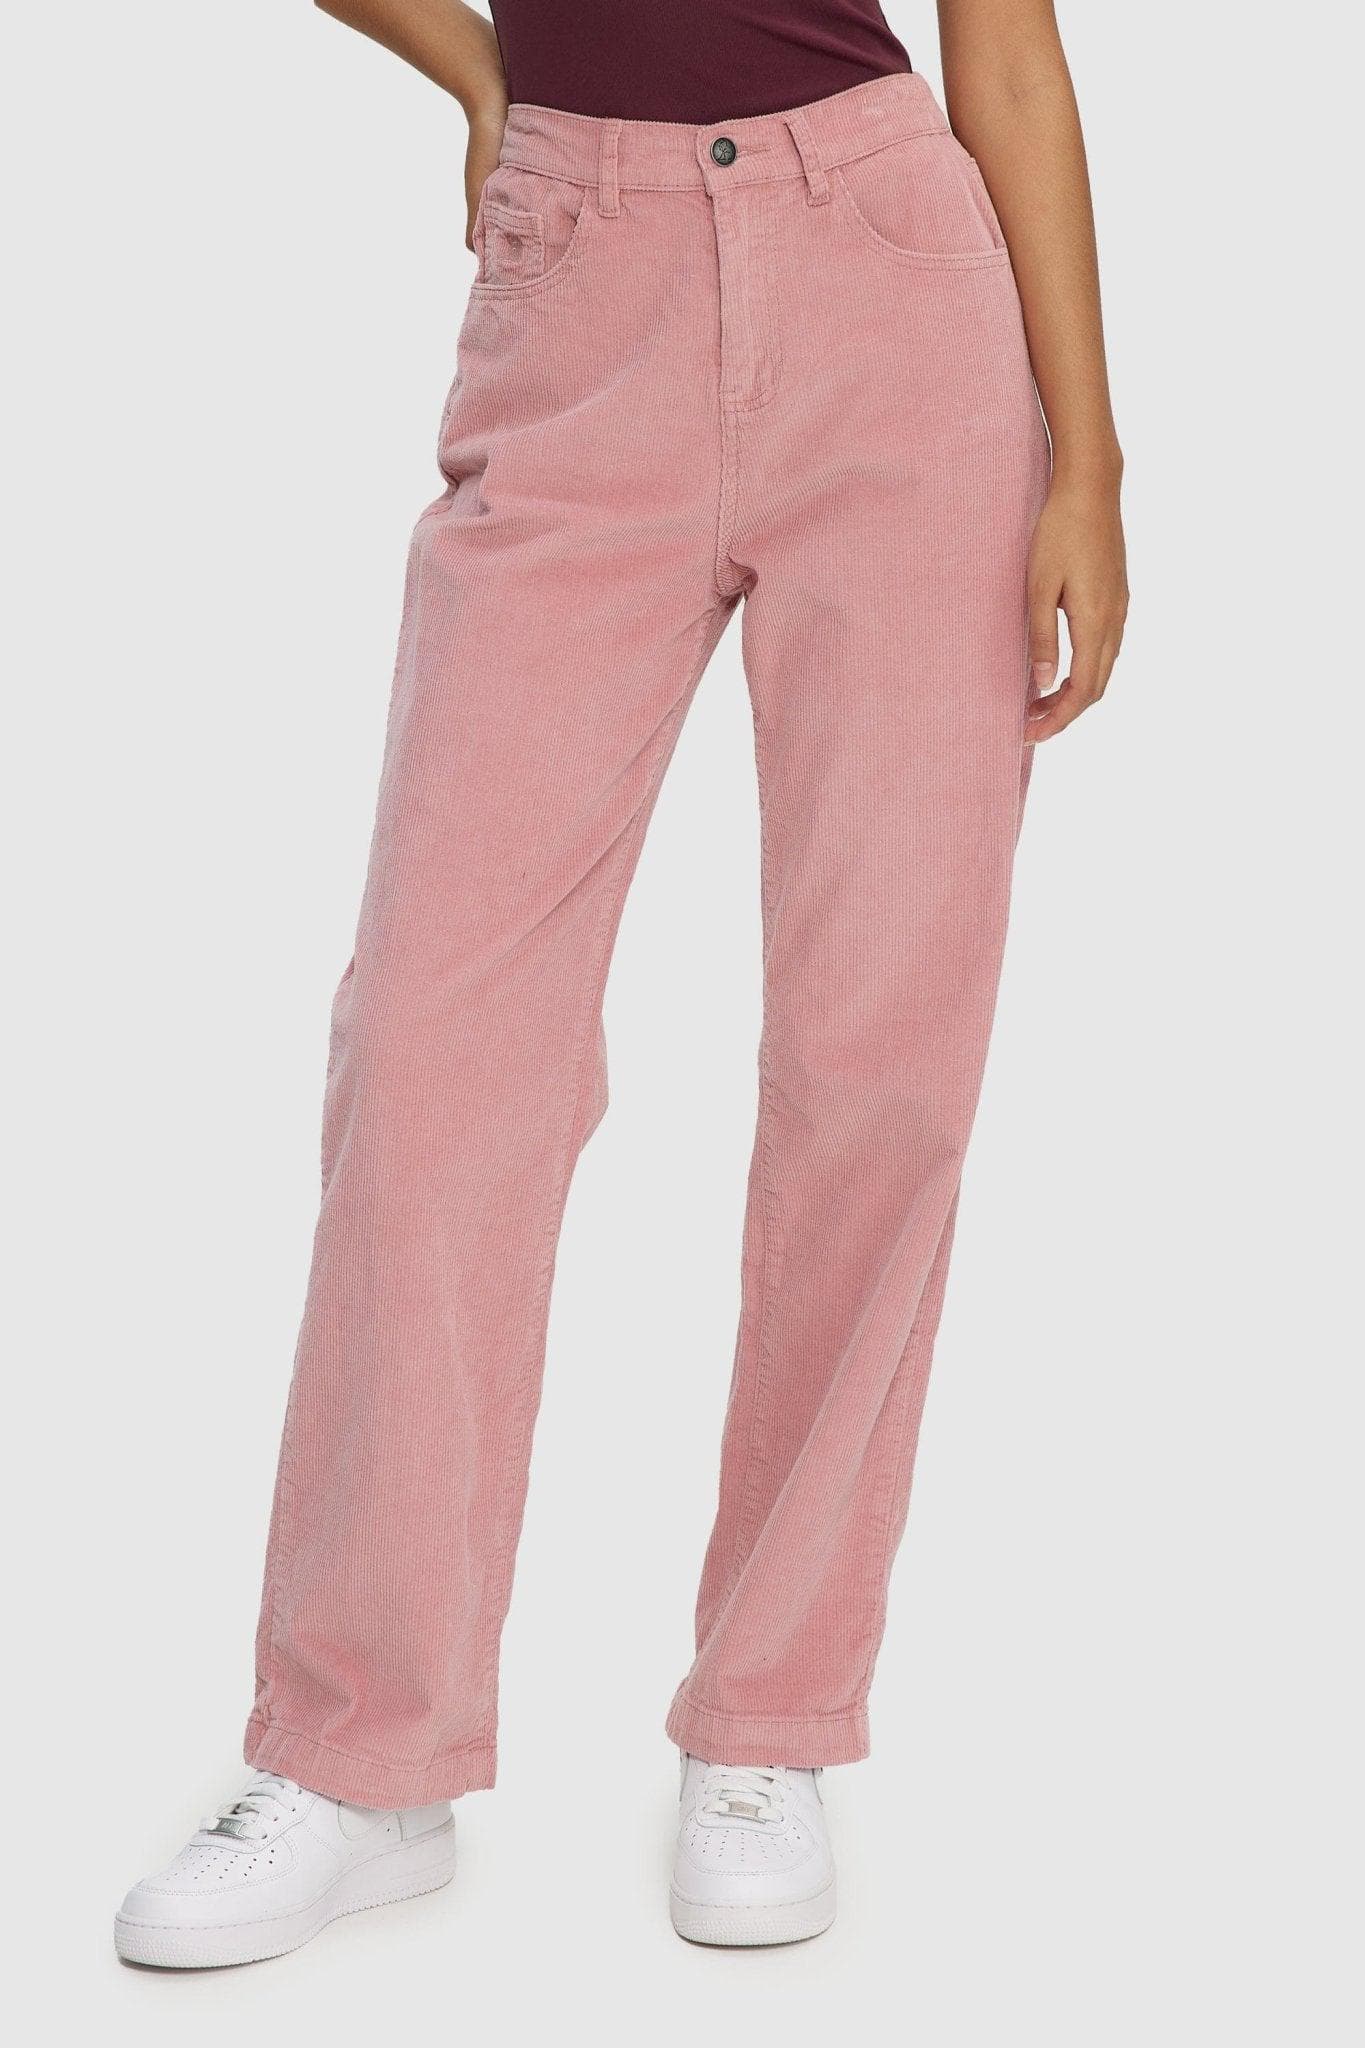 Wide-leg Corduroy Pants - Light pink - Ladies